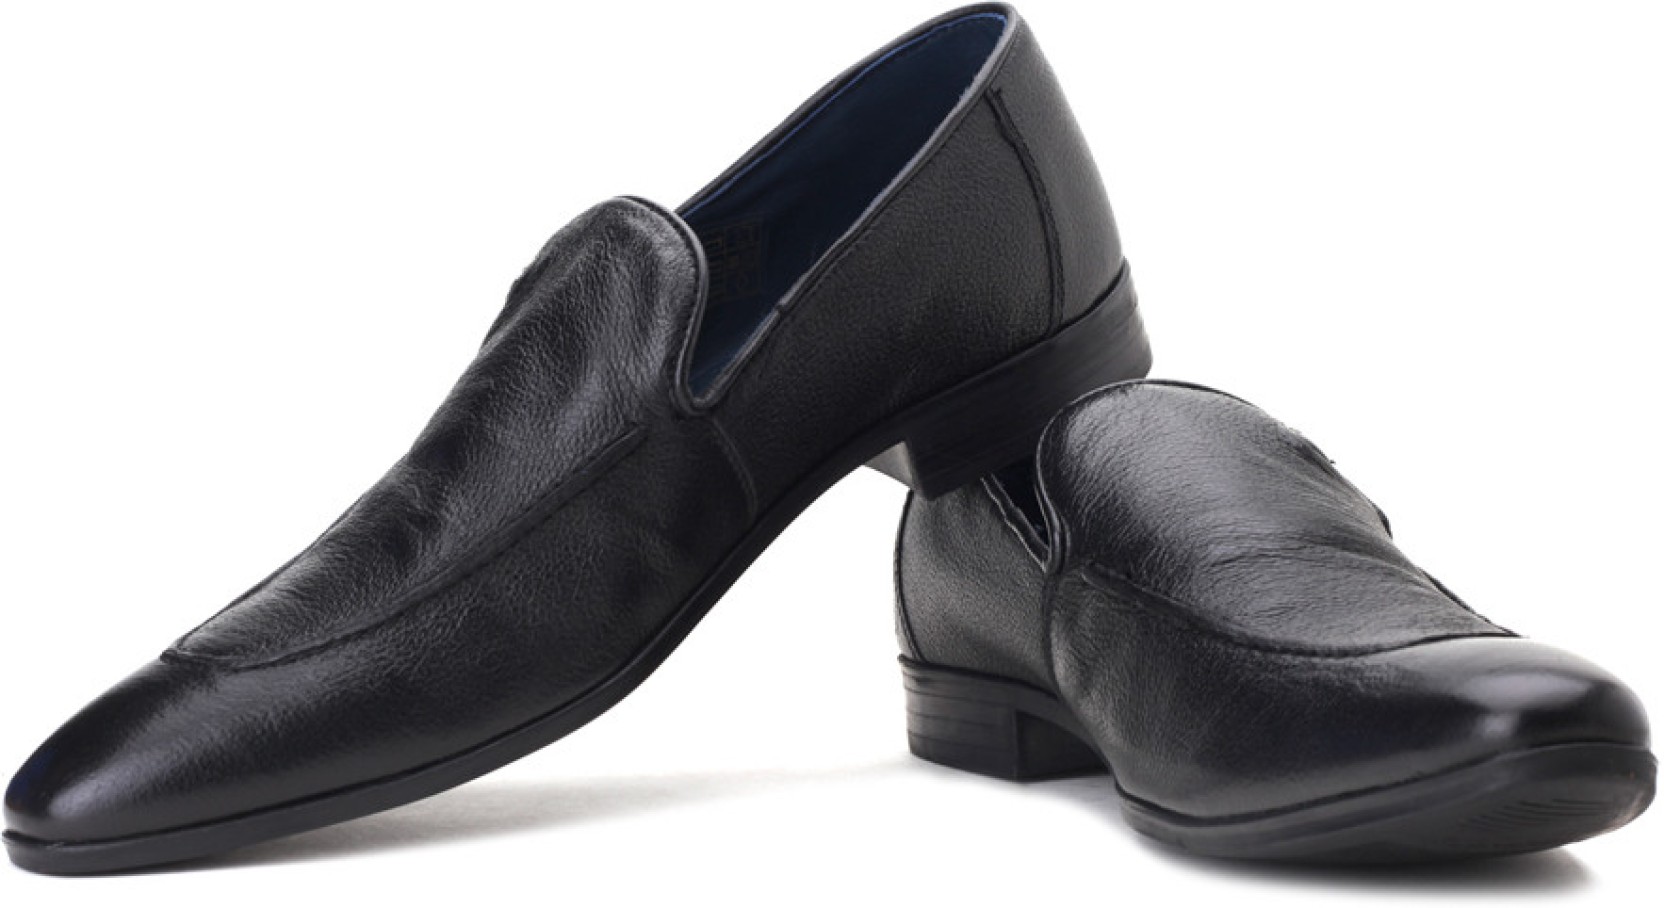 Louis Philippe Slip On Shoes - Buy Black Color Louis Philippe Slip On Shoes Online at Best Price ...